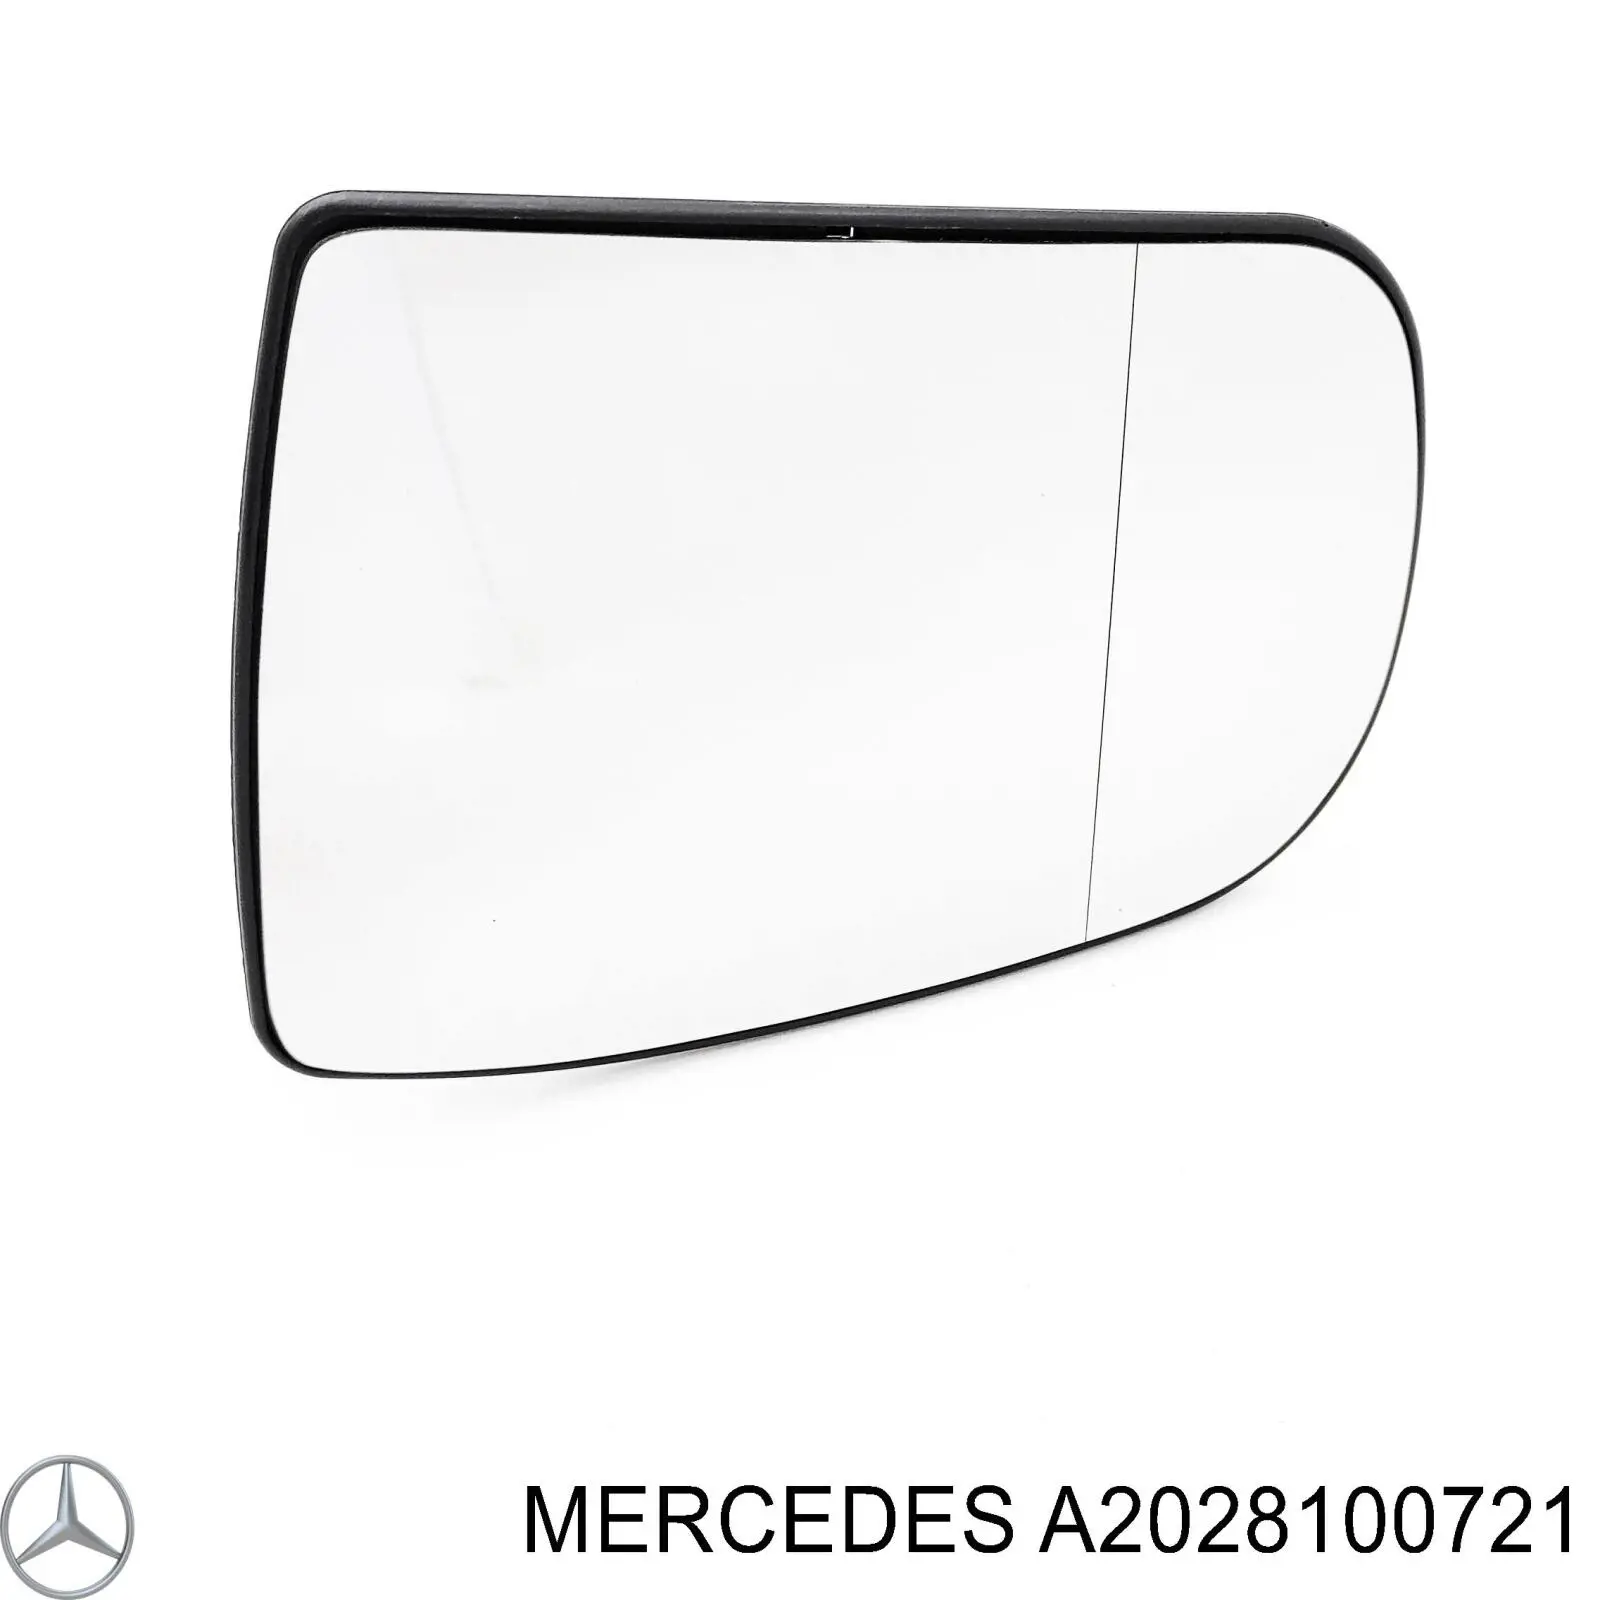 2028100721 Mercedes cristal de espejo retrovisor exterior izquierdo